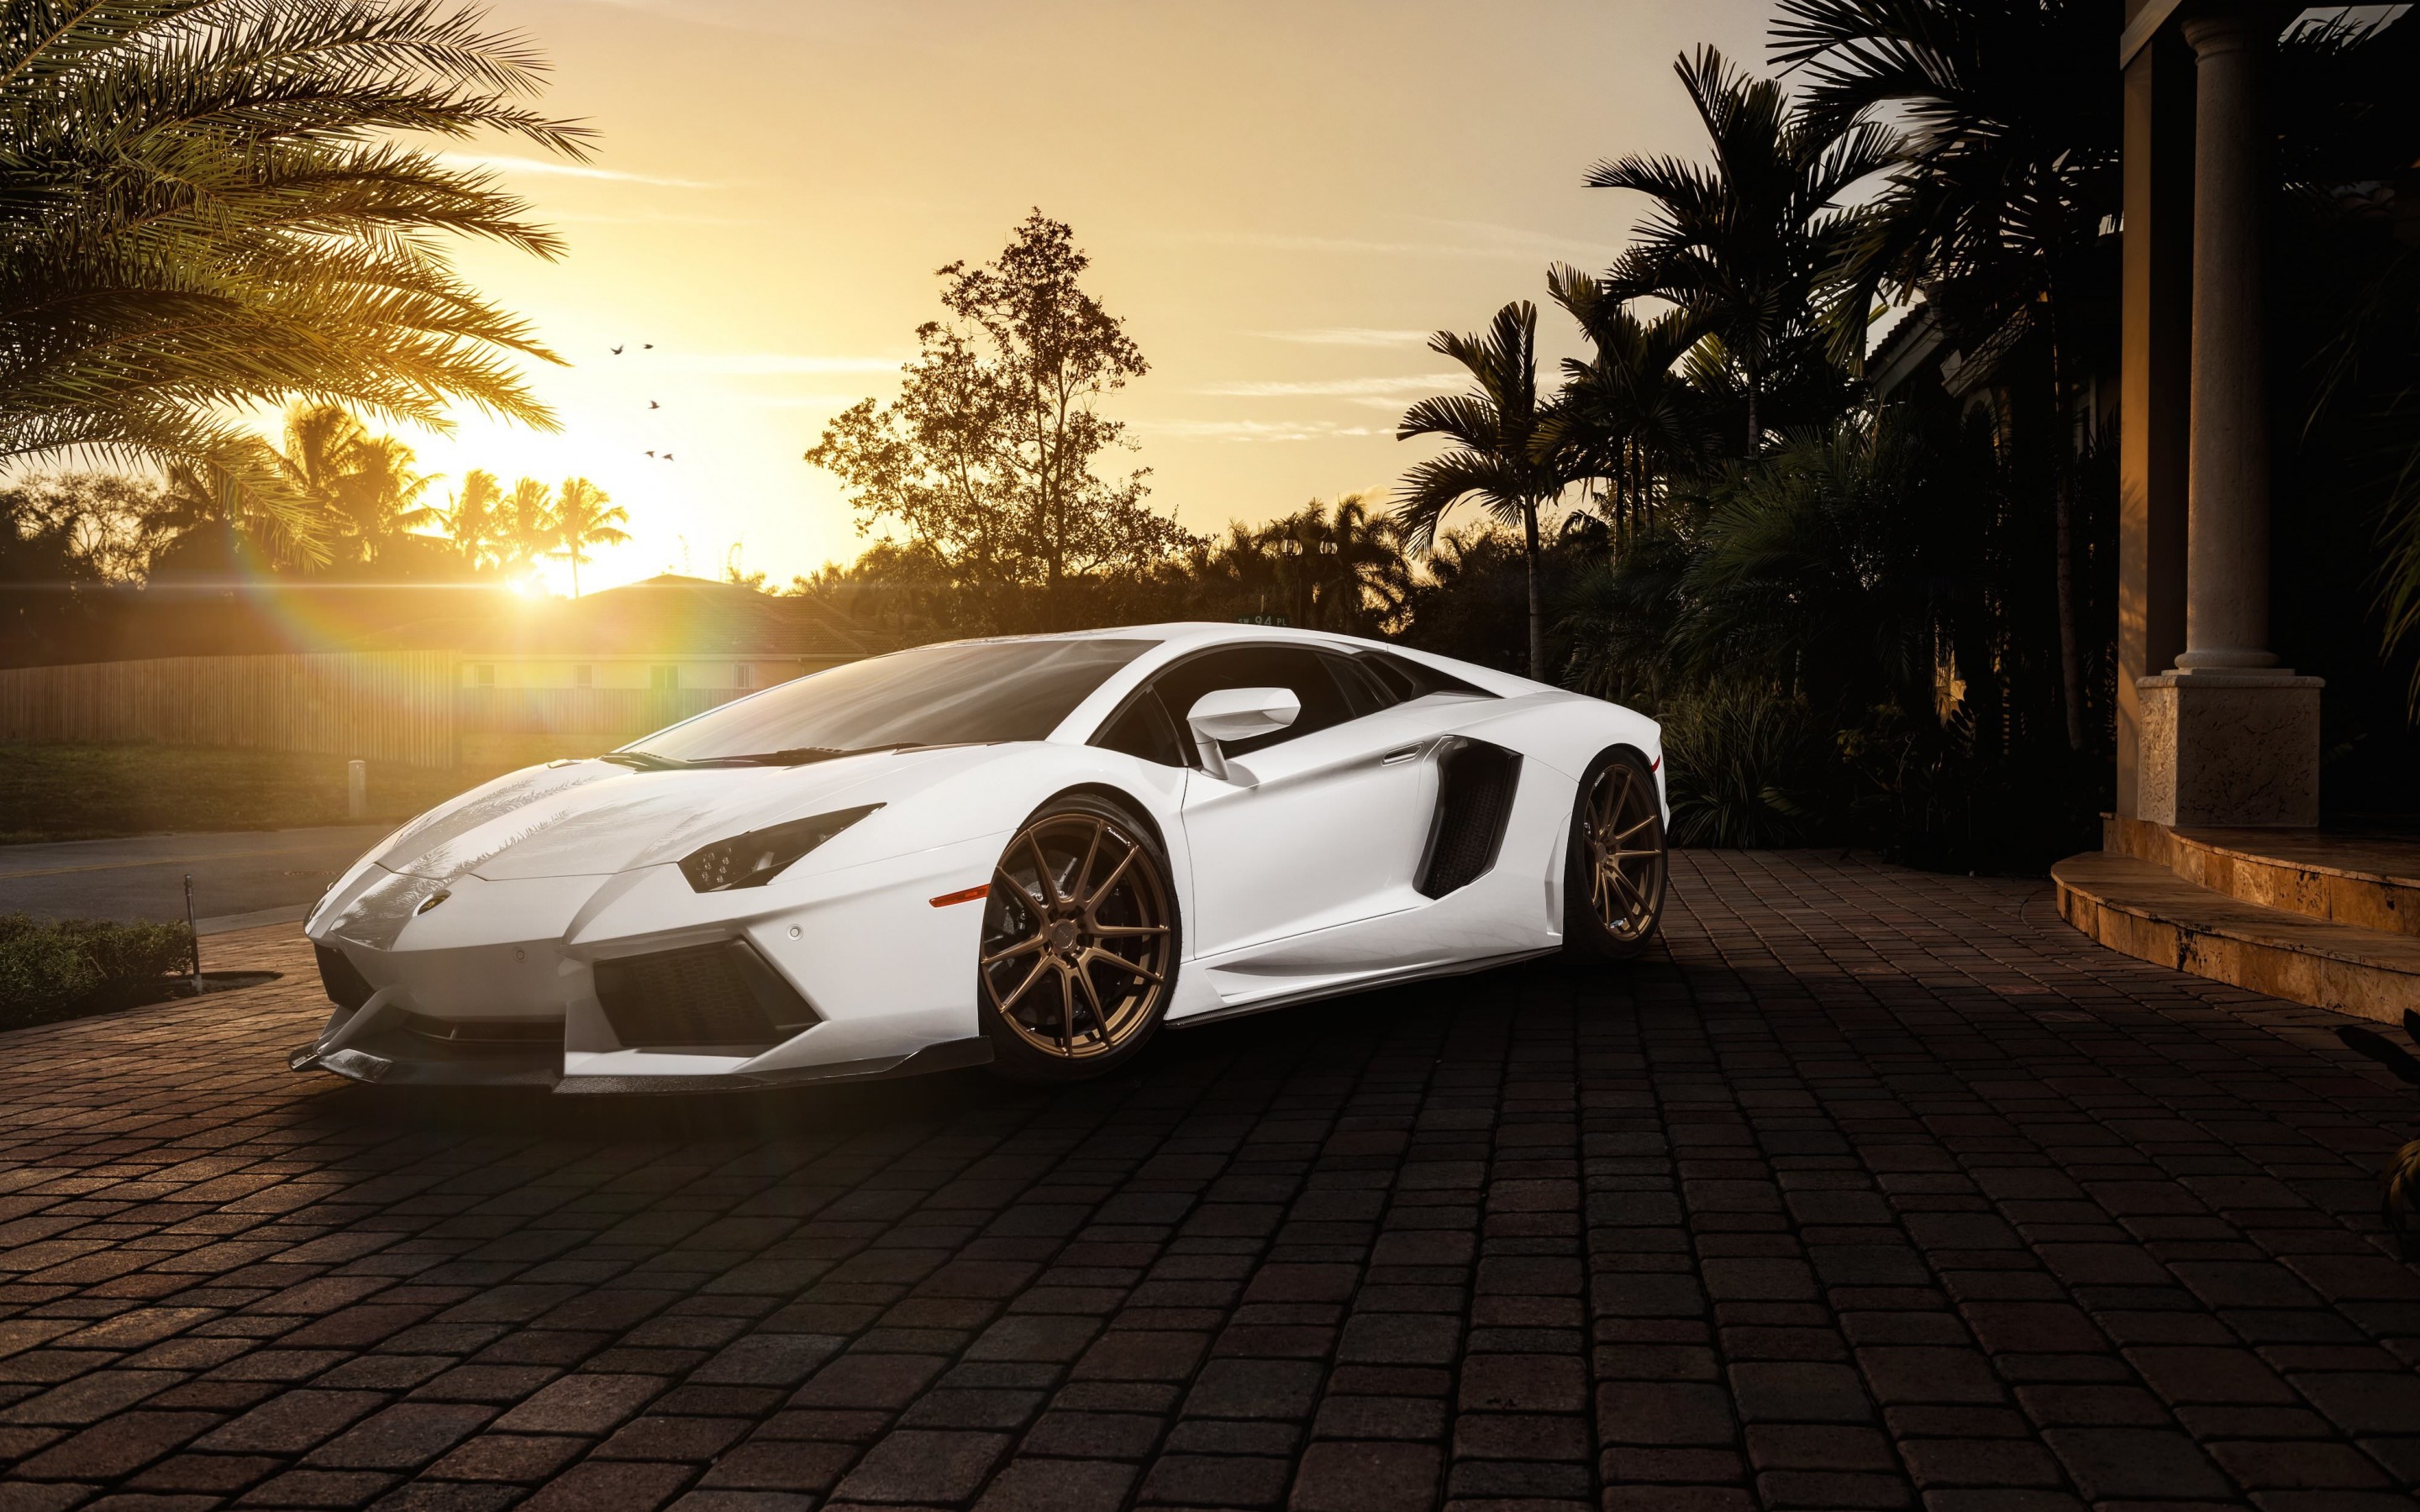 Lamborghini Aventador LP700-4 in White Wallpaper for Desktop 2880x1800